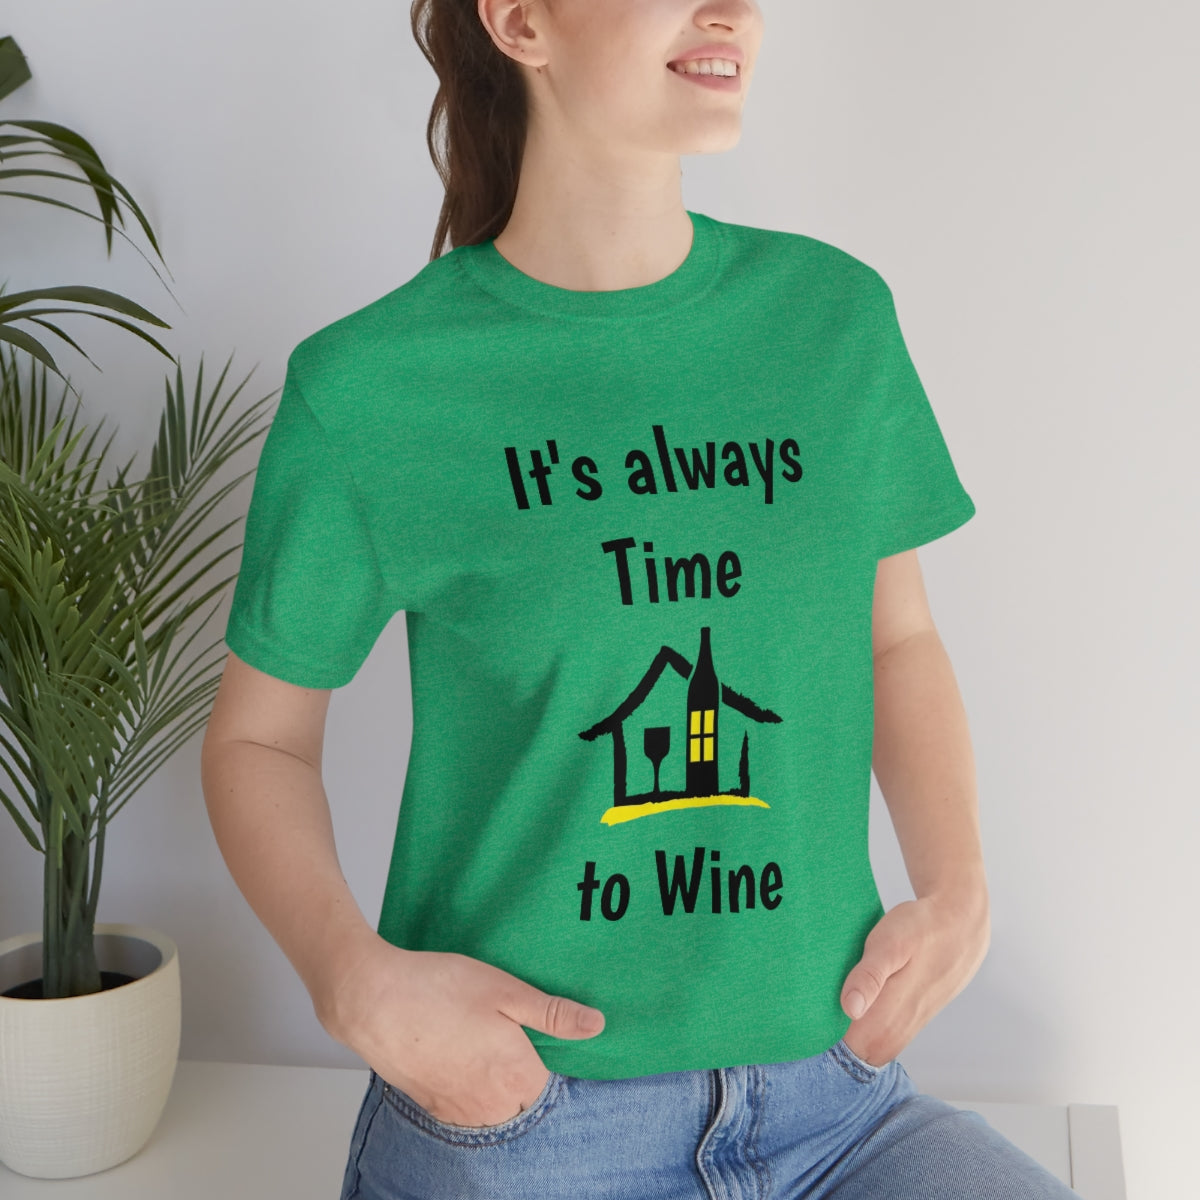 It's always time to Wine - Funny Unisex Short Sleeve Tee - CrazyTomTShirts